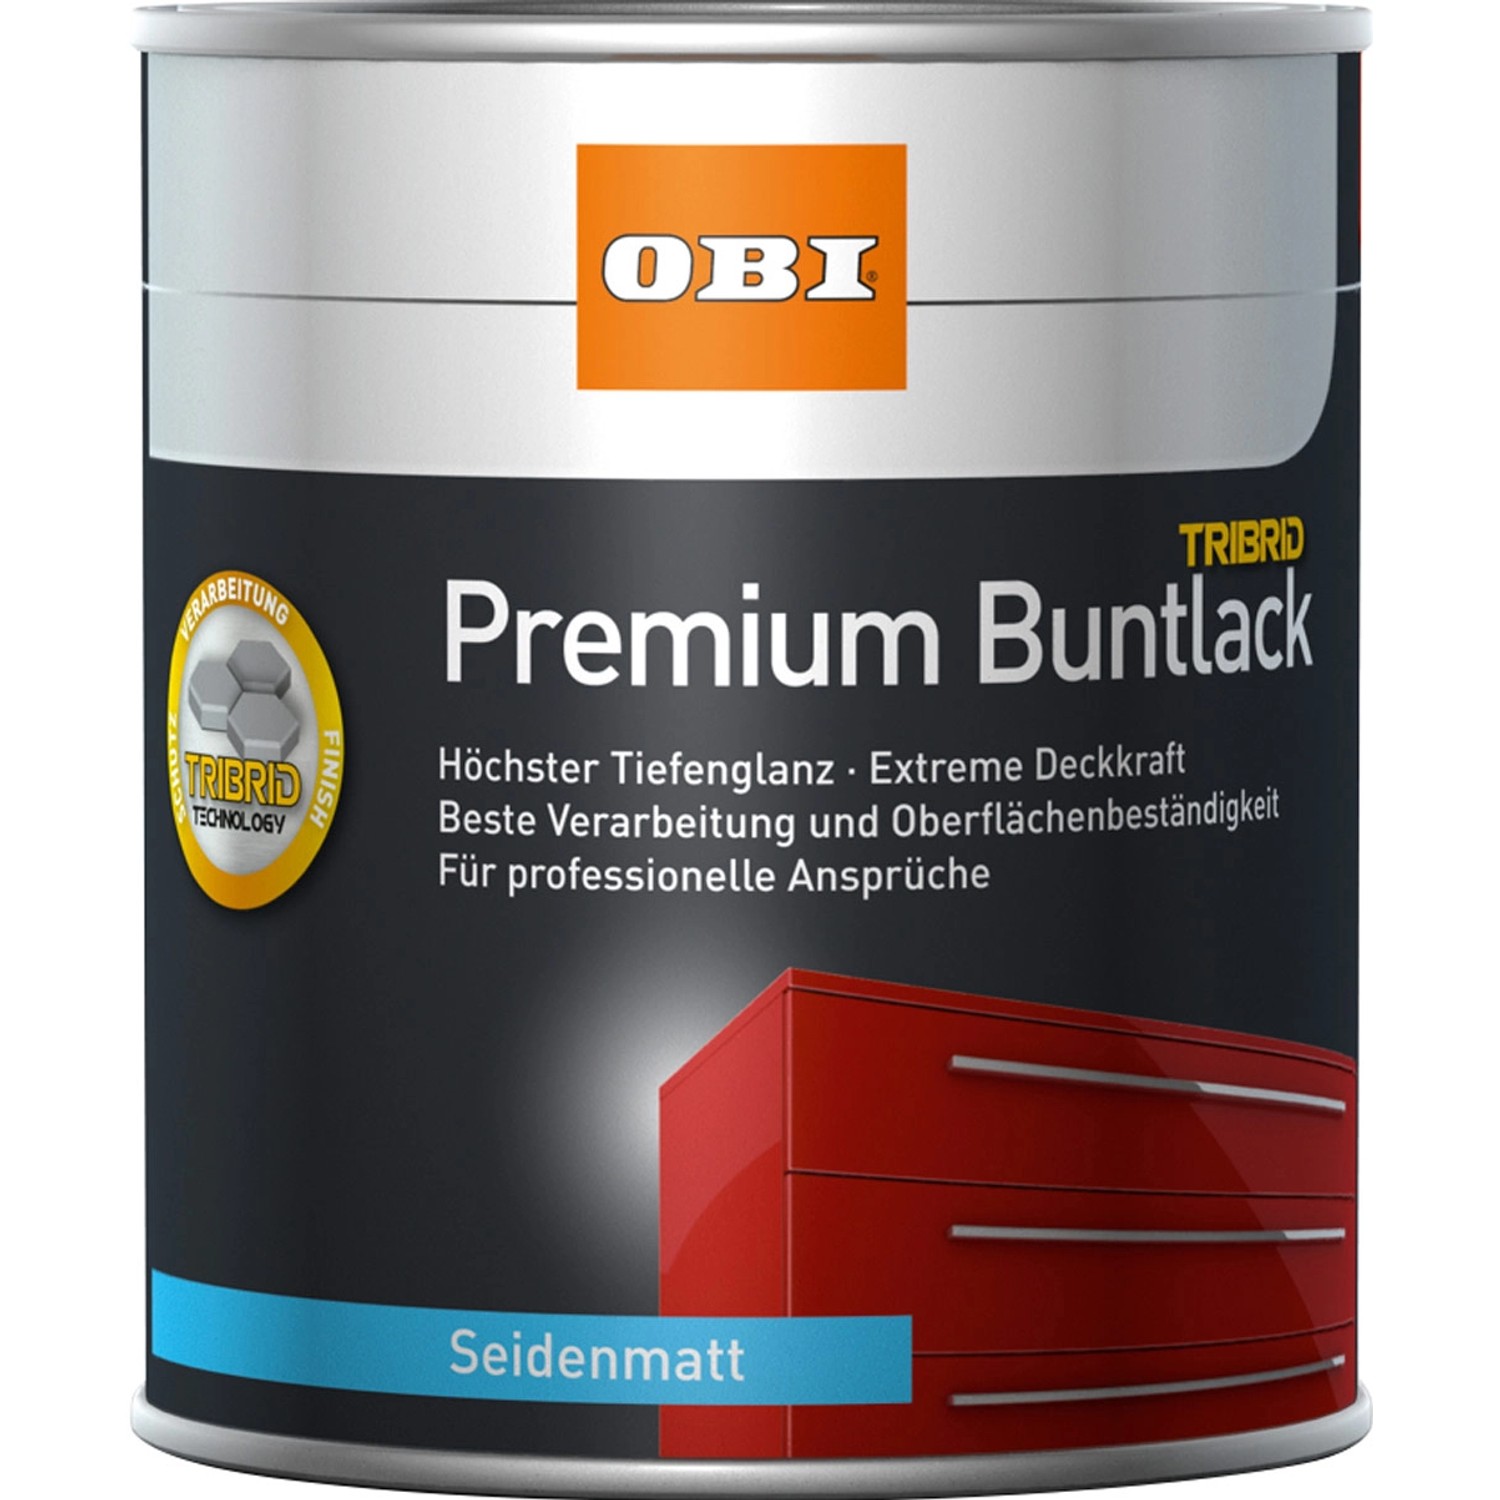 OBI Premium Buntlack Tribrid Schokobraun seidenmatt 125 ml